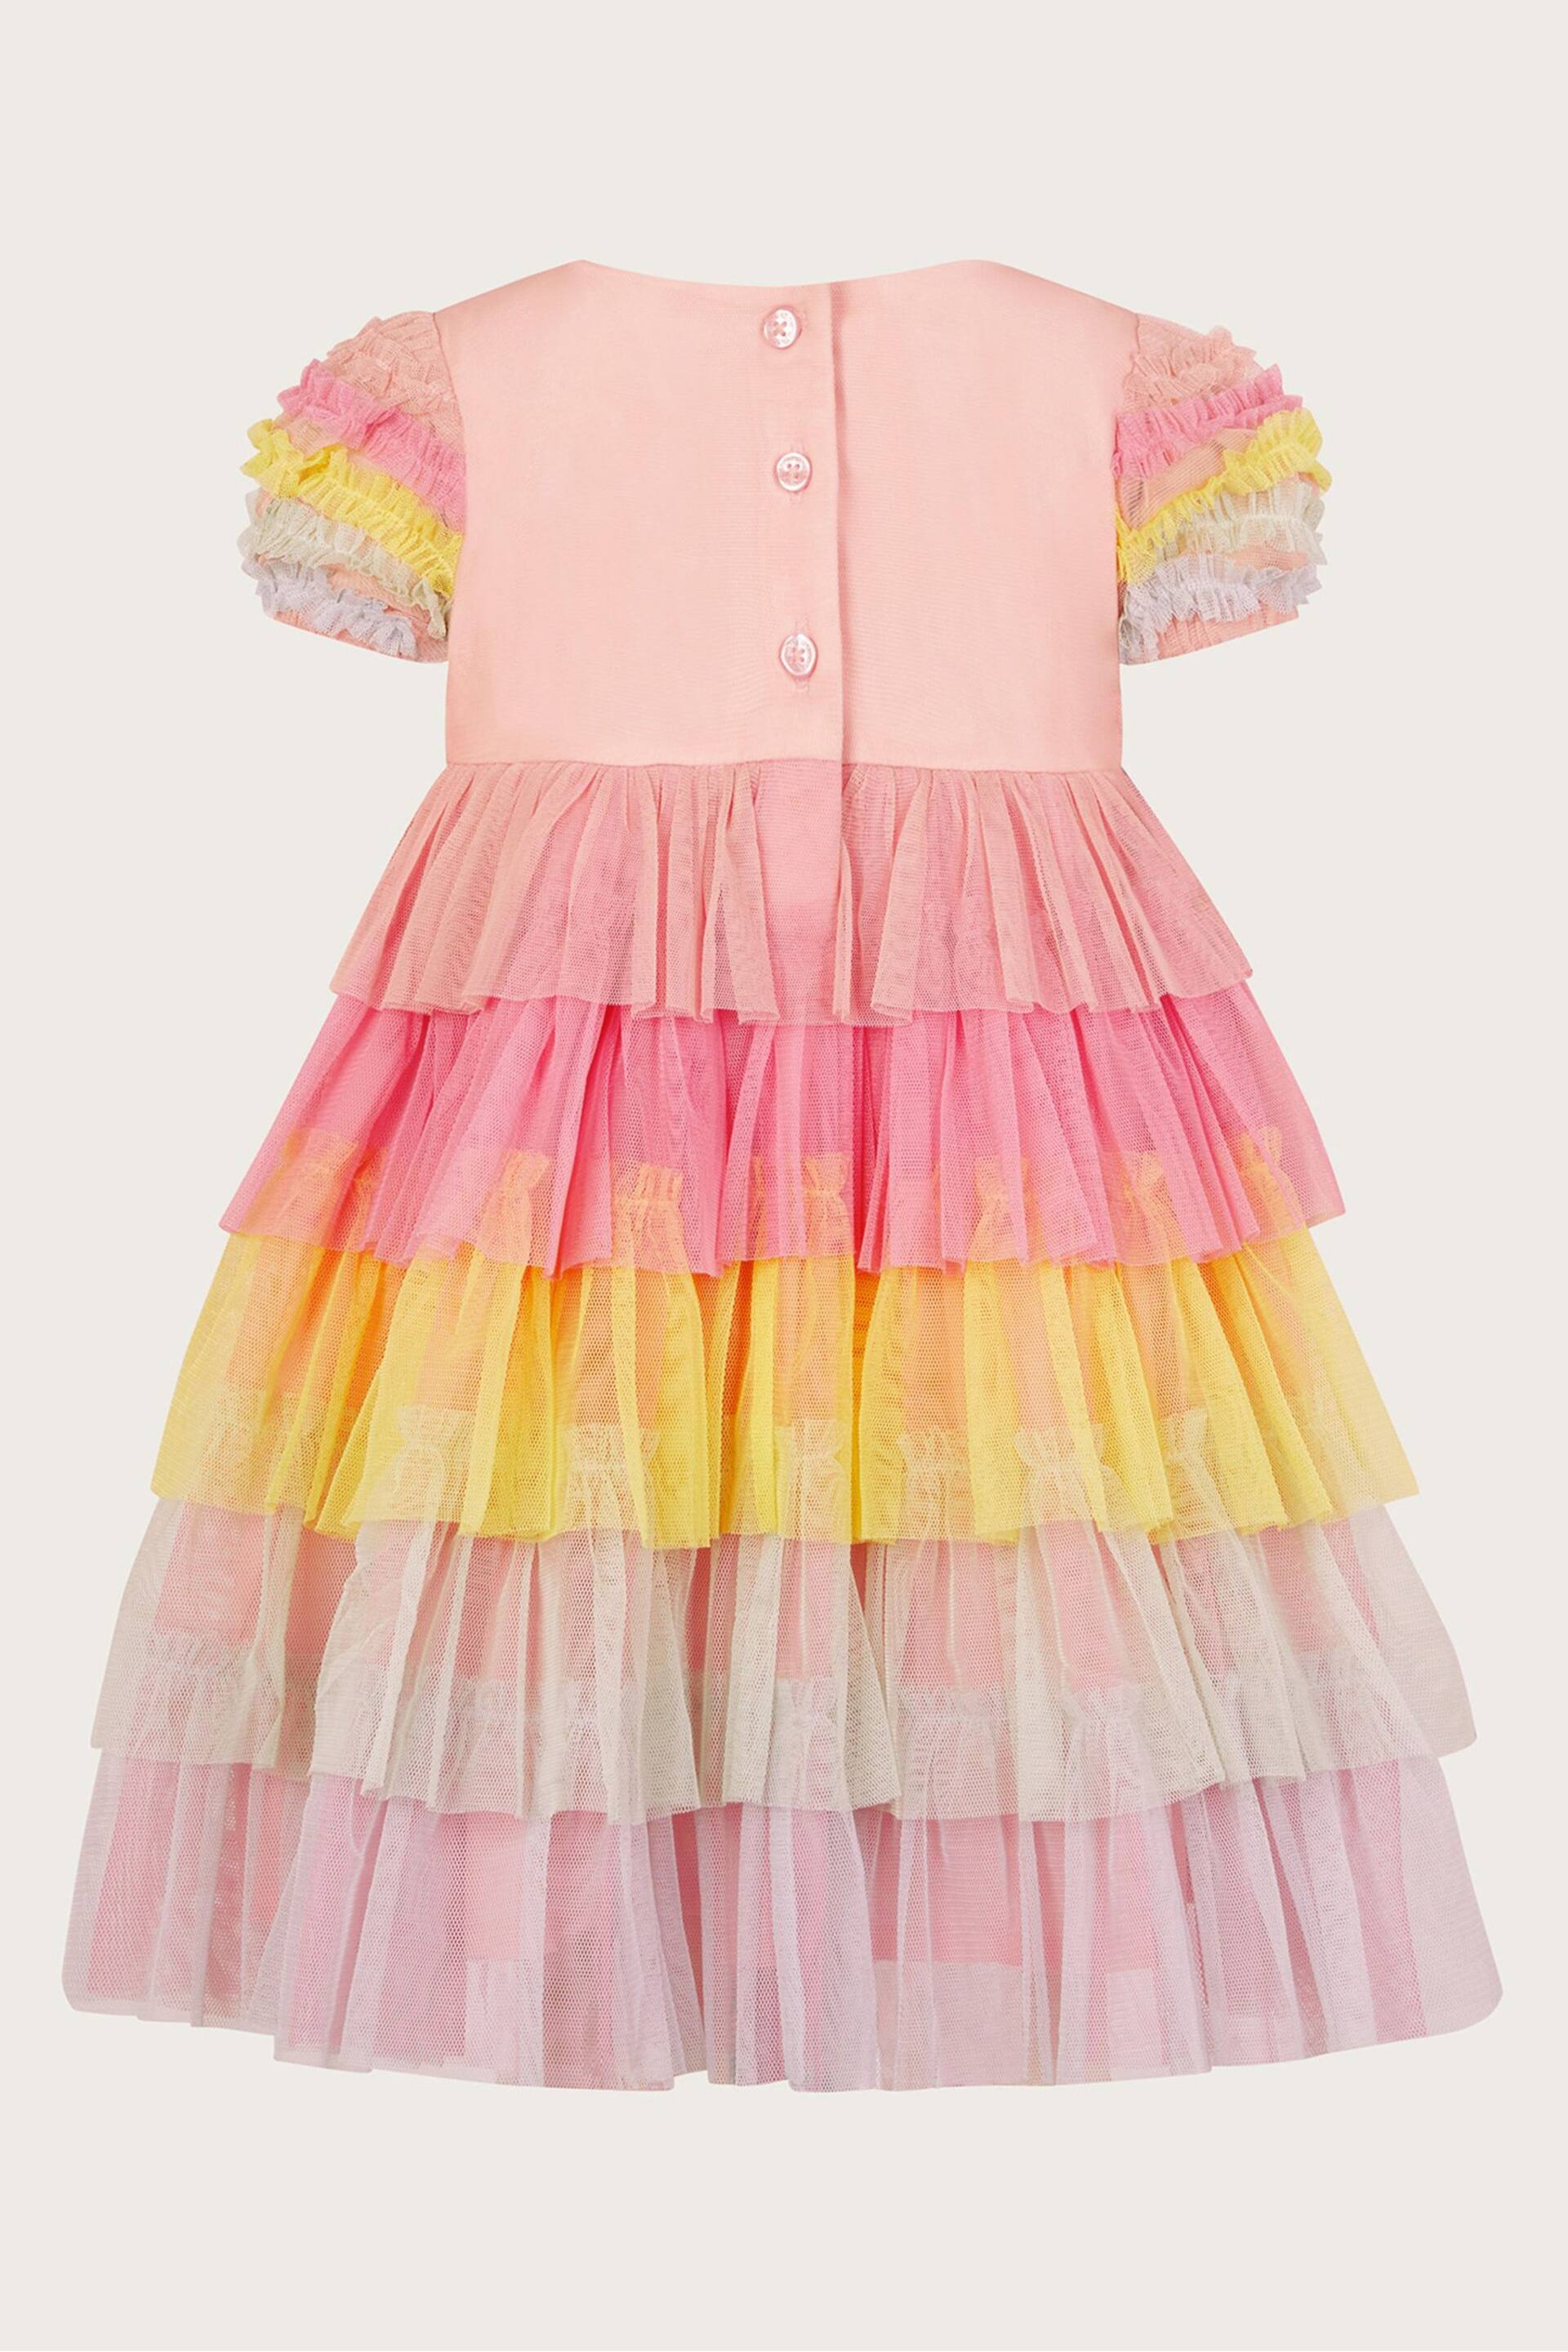 Monsoon Pink Baby Colourblock Dress - Image 2 of 3